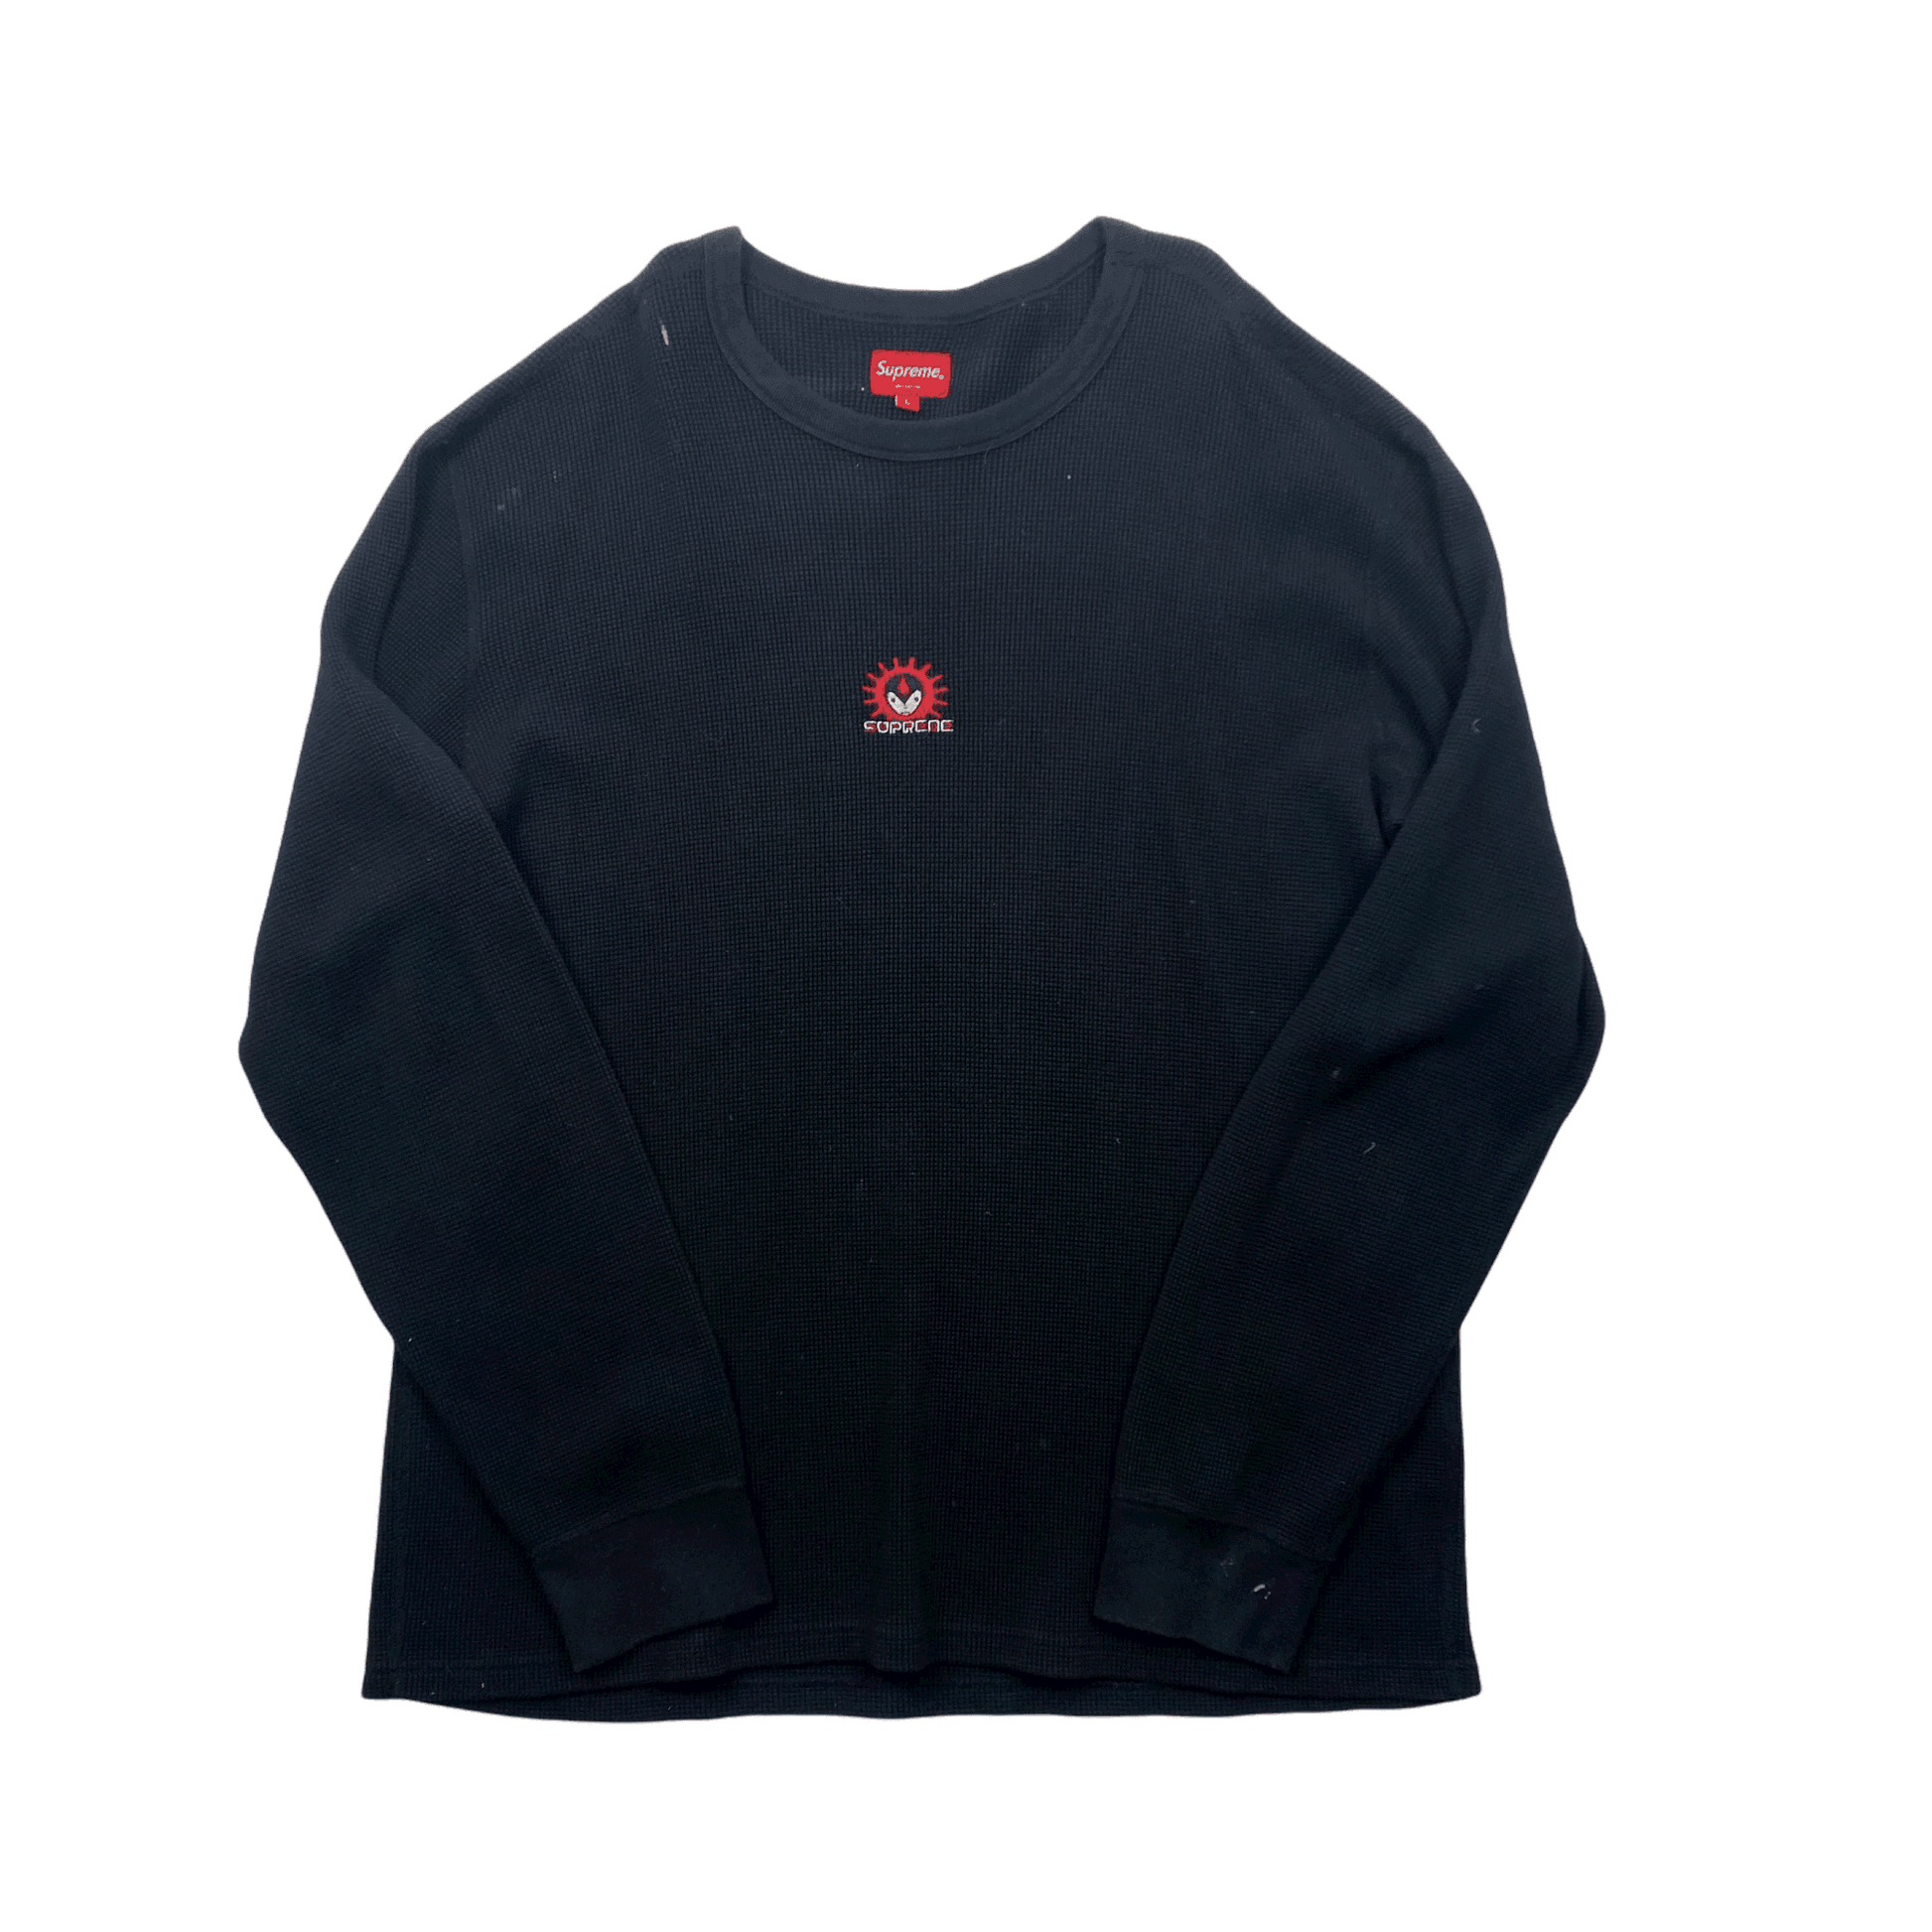 Black Supreme Vampire Waffle Knit FW18 Sweatshirt - Large - The Streetwear Studio